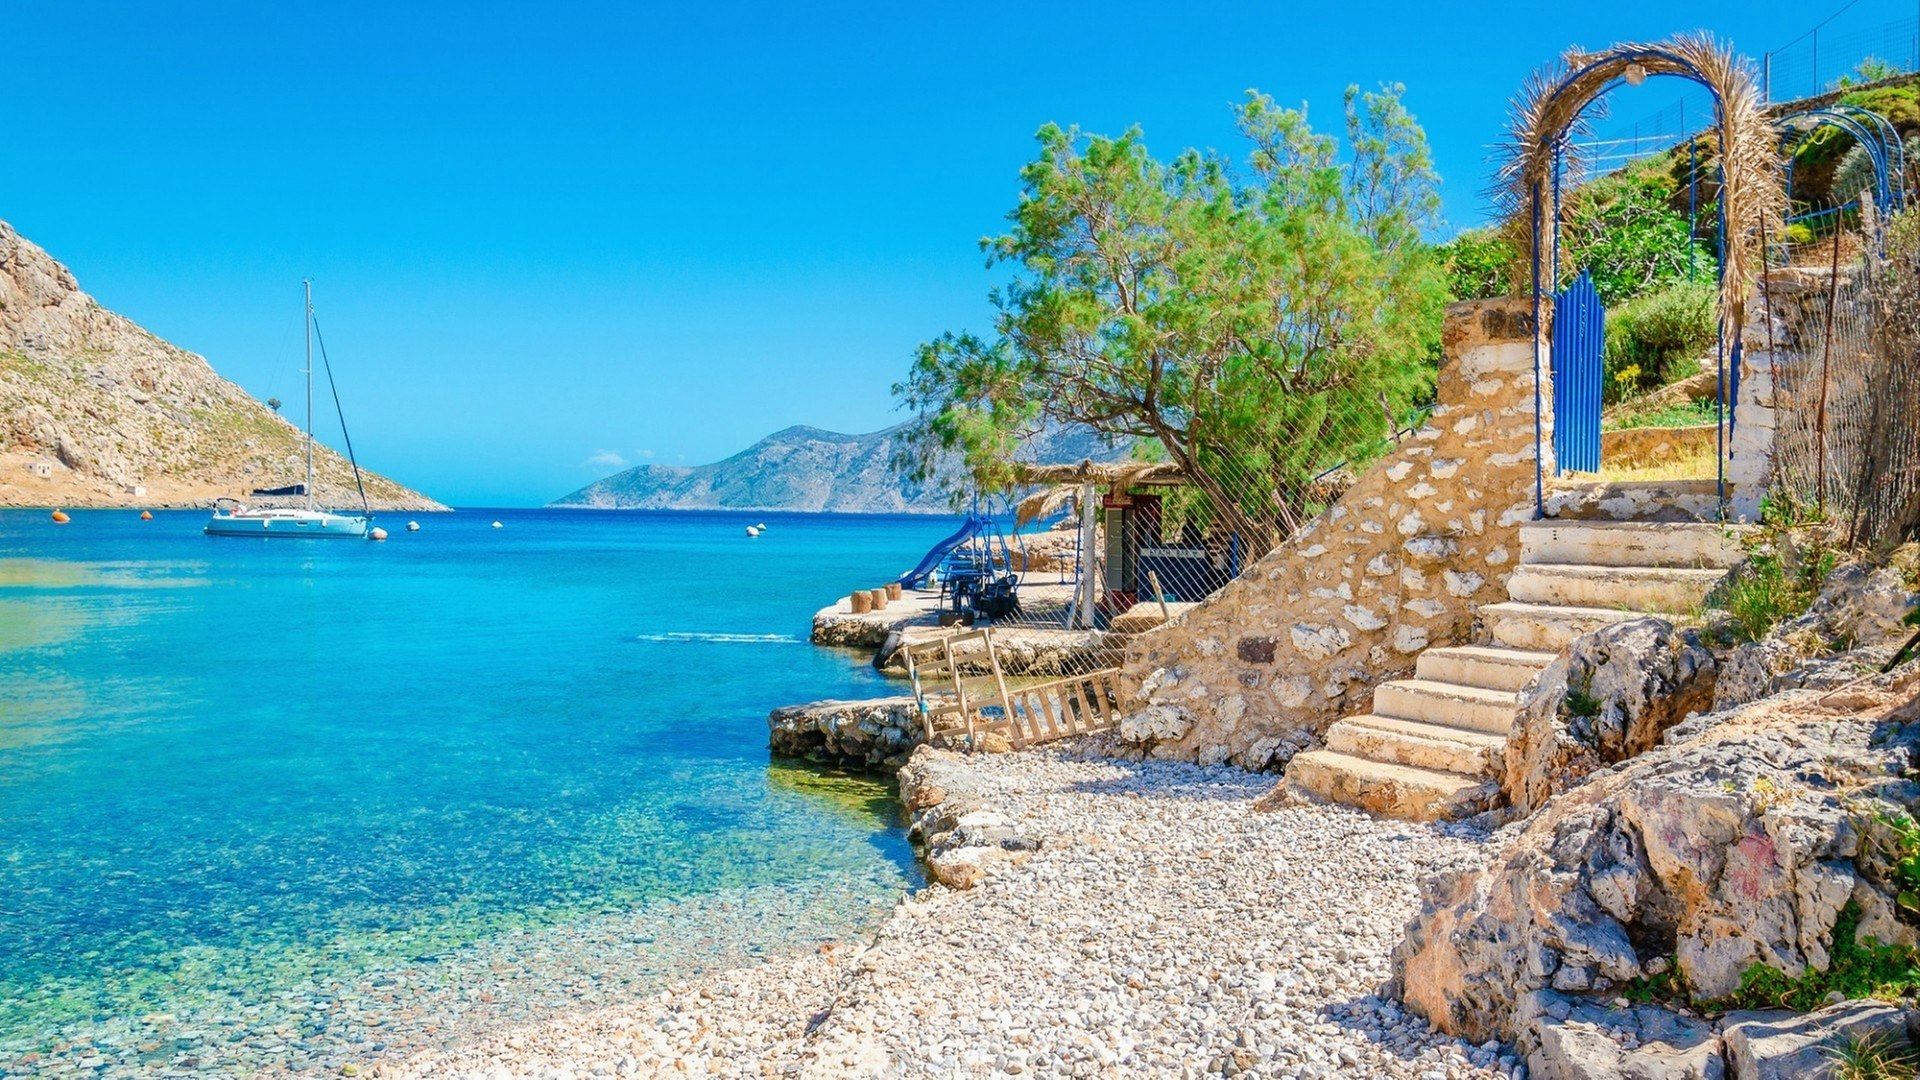 Stairs from sandy beach of amazing bay on Greece island Kalymnos, Greece